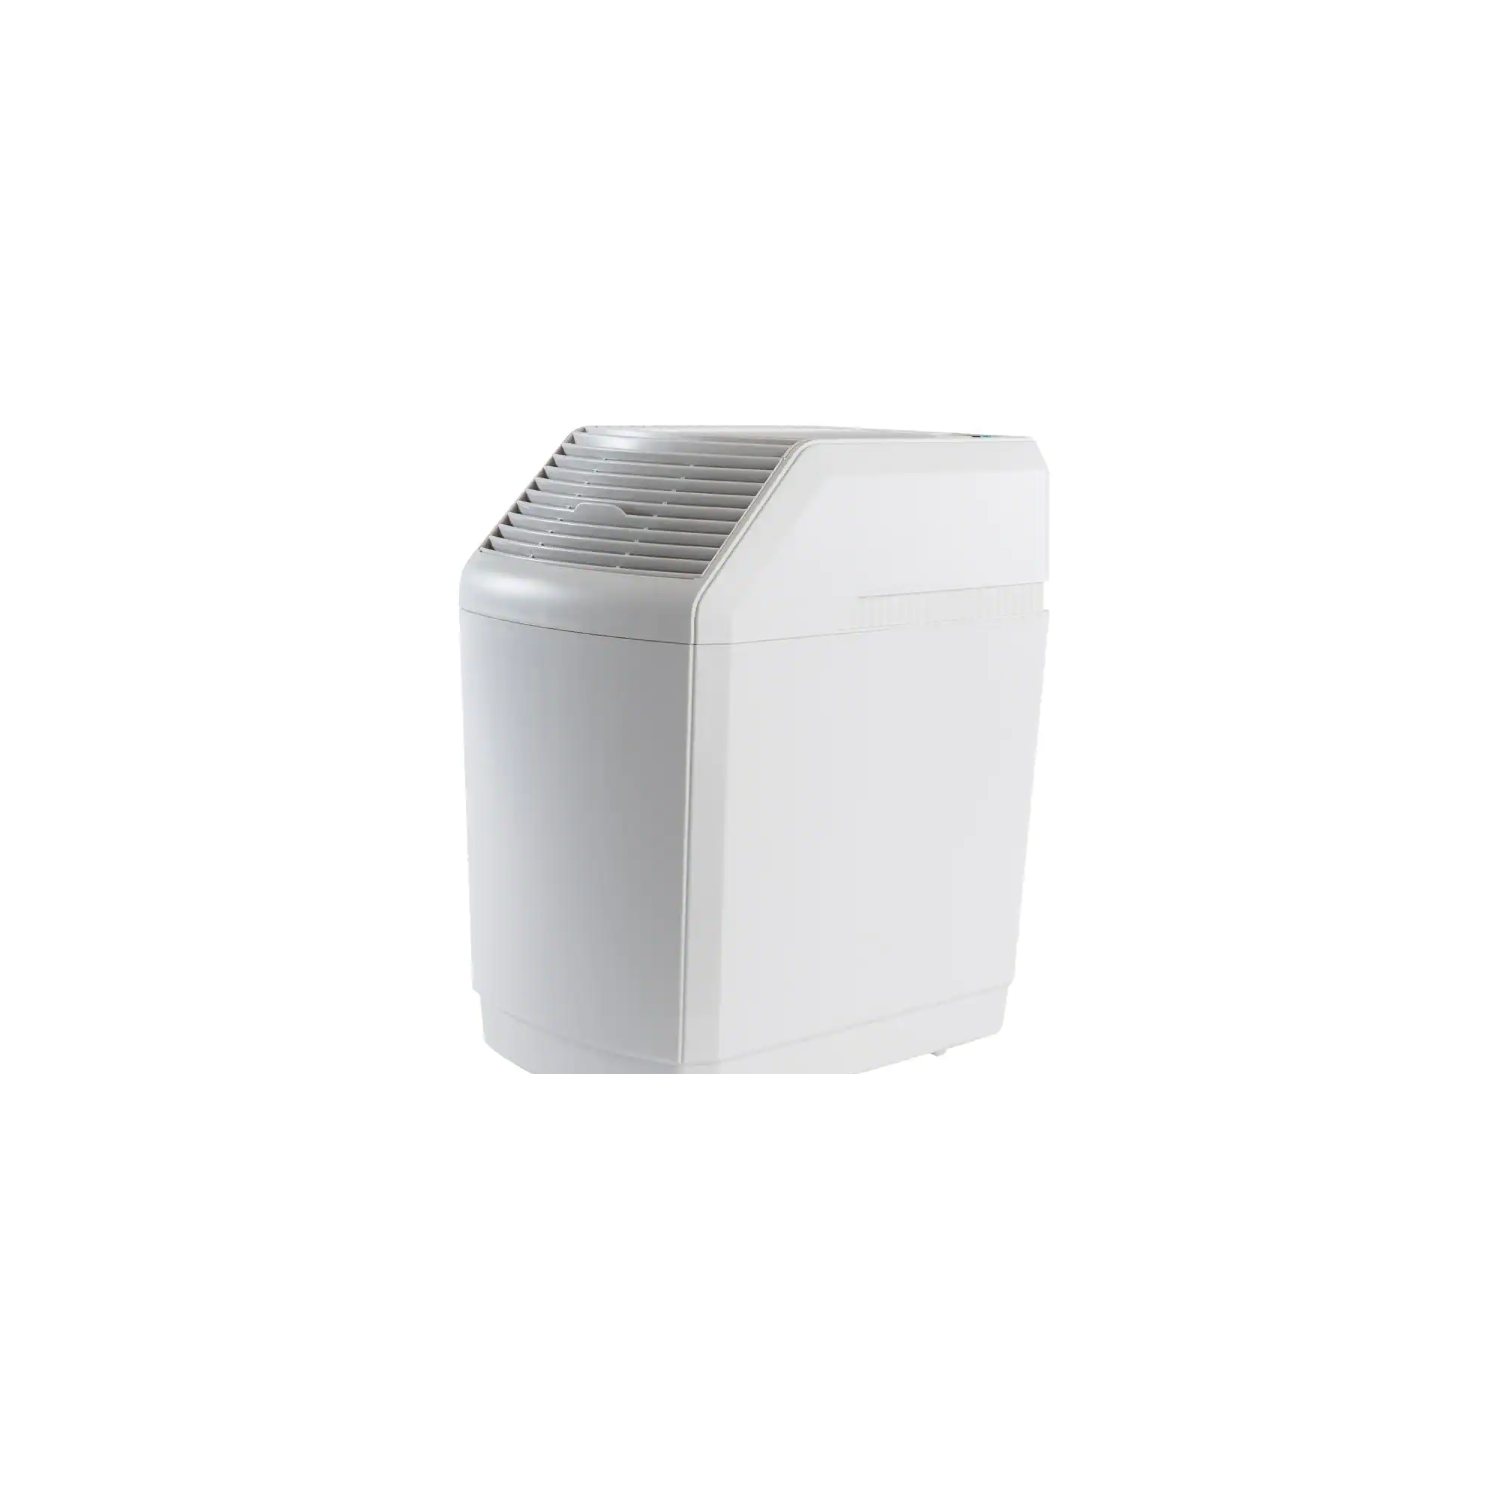 White AIRCARE 831000 Space-Saver Evaporative Humidifier 